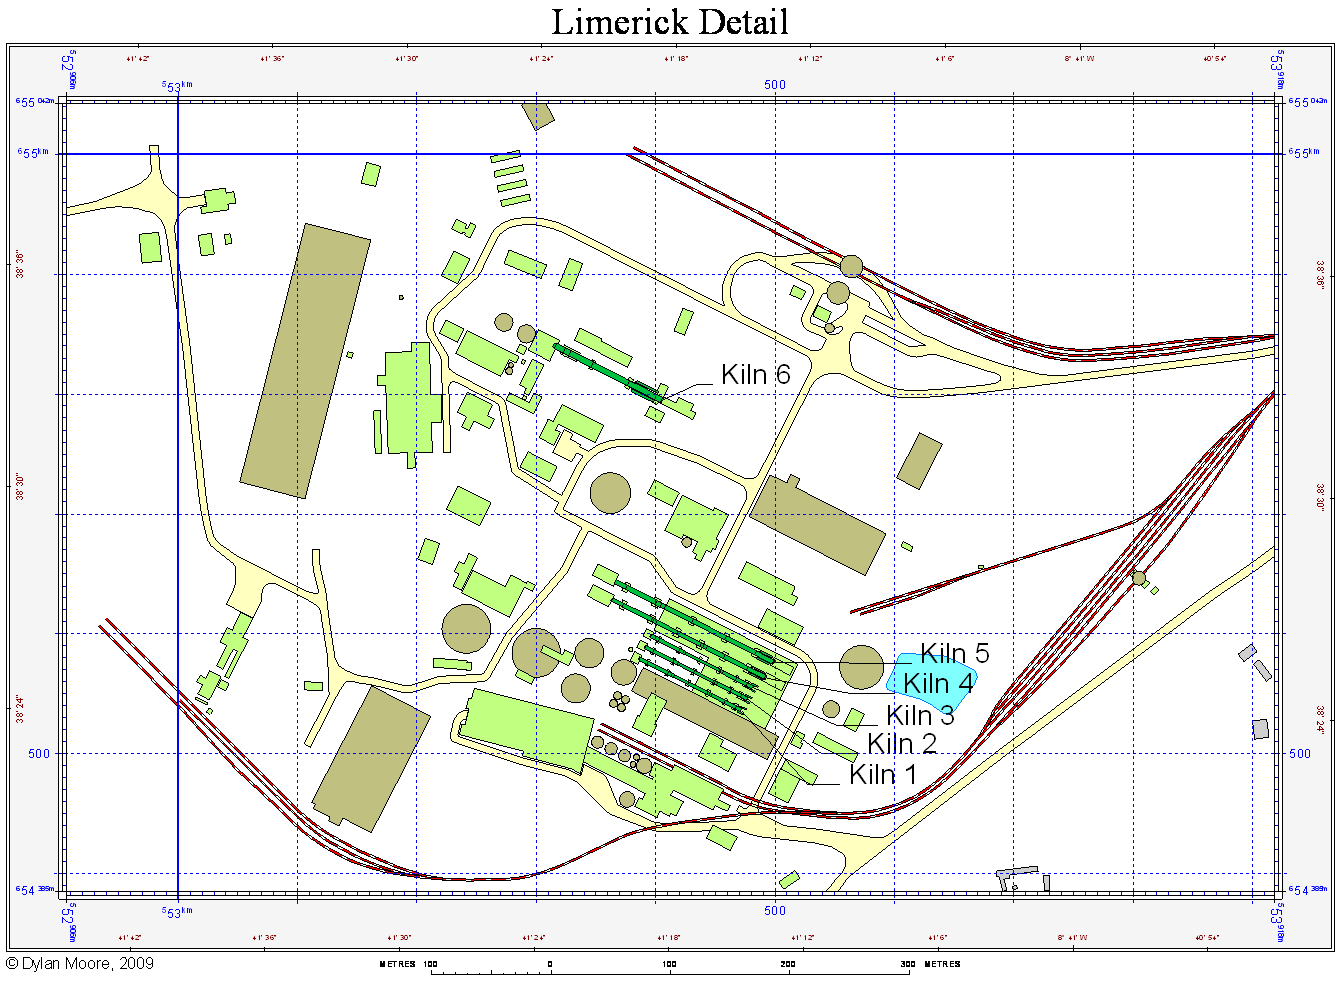 Limerick Detail